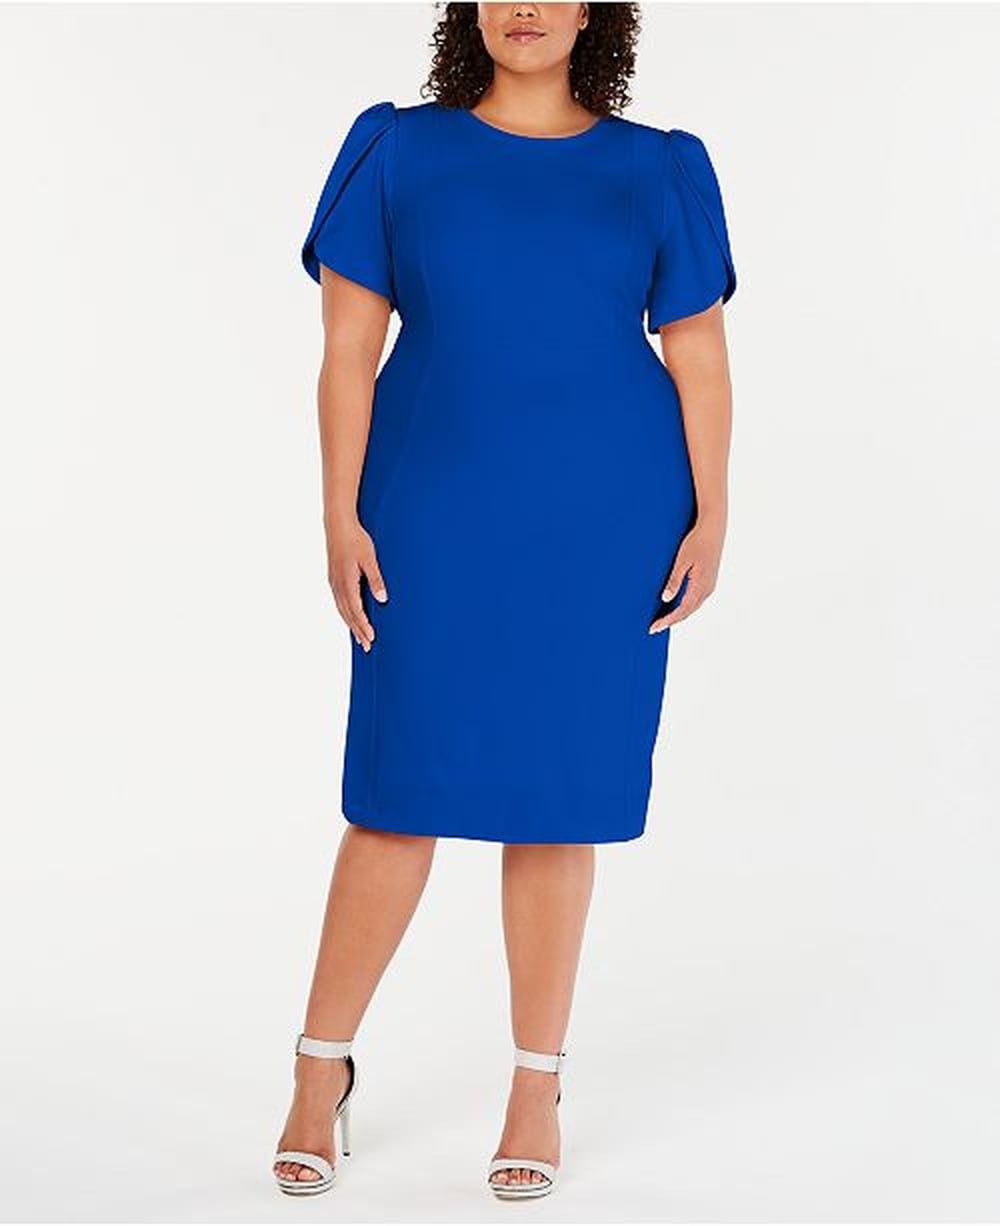 Meghan Markle's Blue Victoria Beckham Dress 2020 | POPSUGAR Fashion